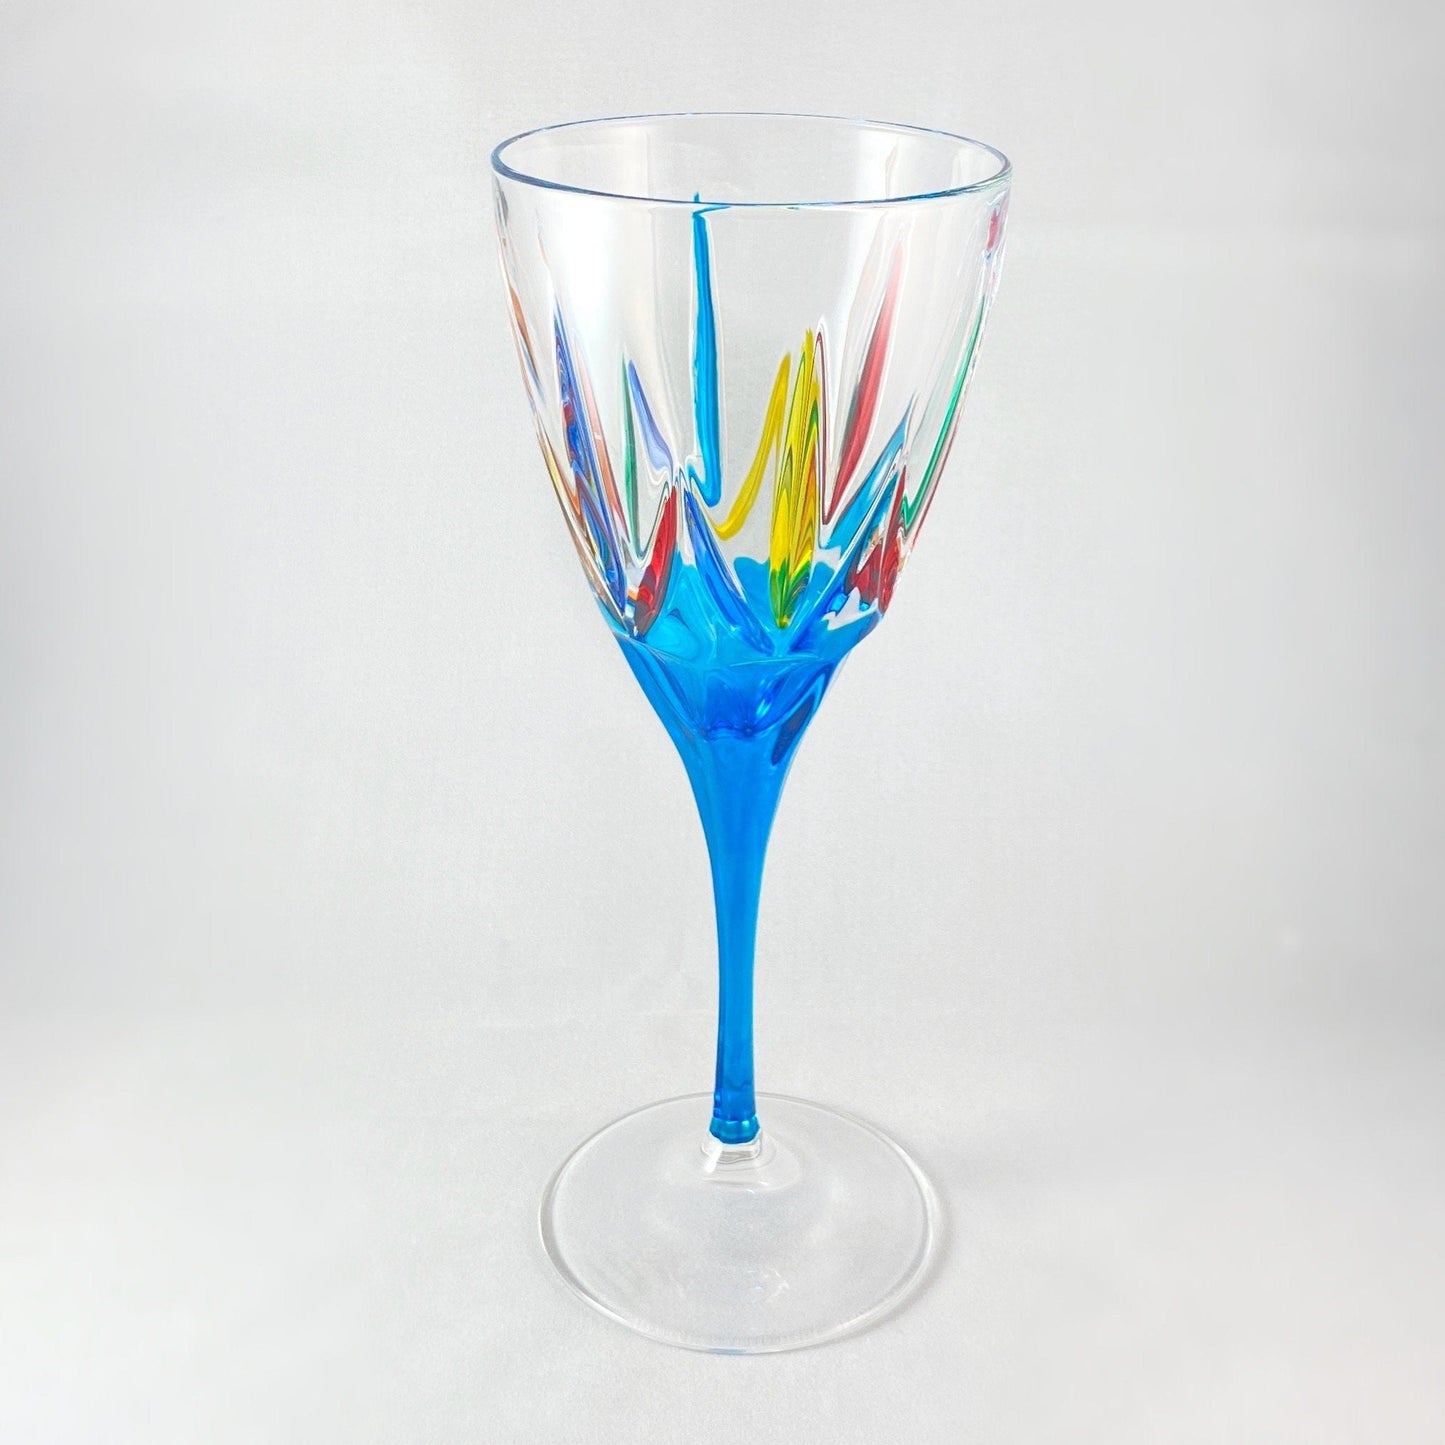 Aqua Blue Stem Chic Venetian Wine Glass - Handmade in Italy, Colorful Murano Glass